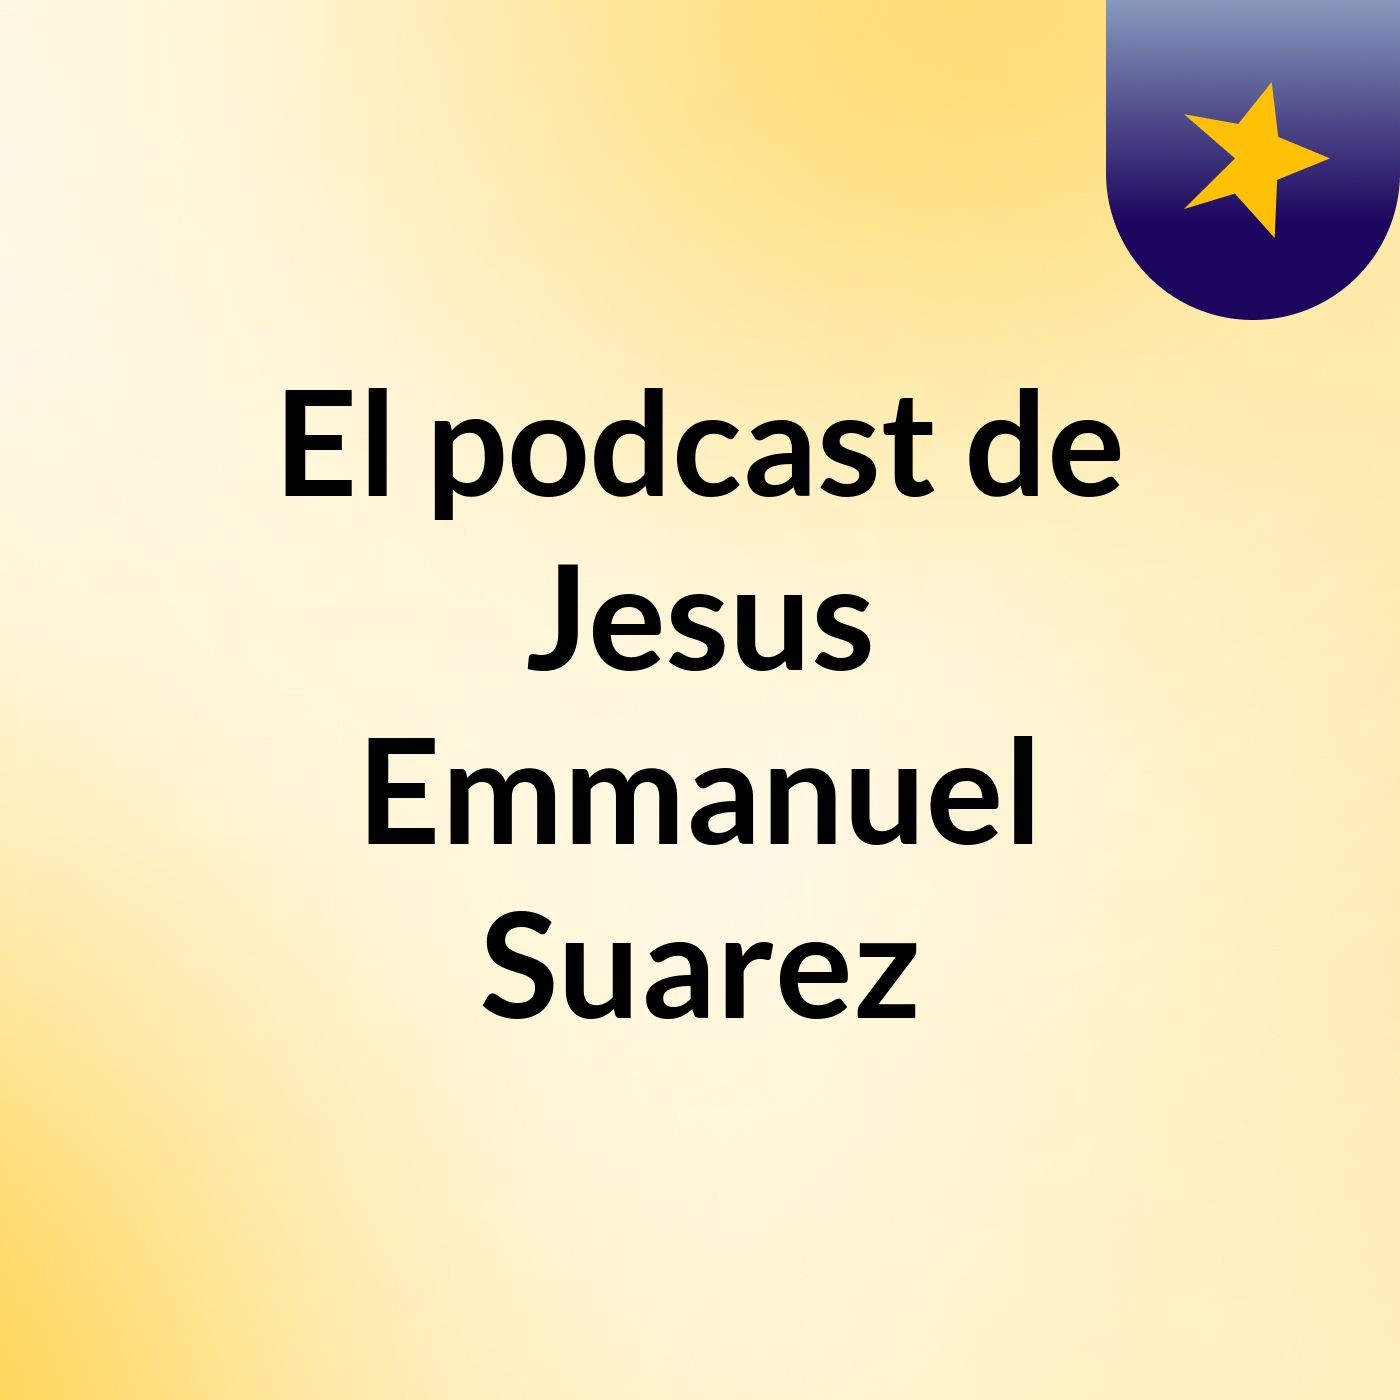 El podcast de Jesus Emmanuel Suarez